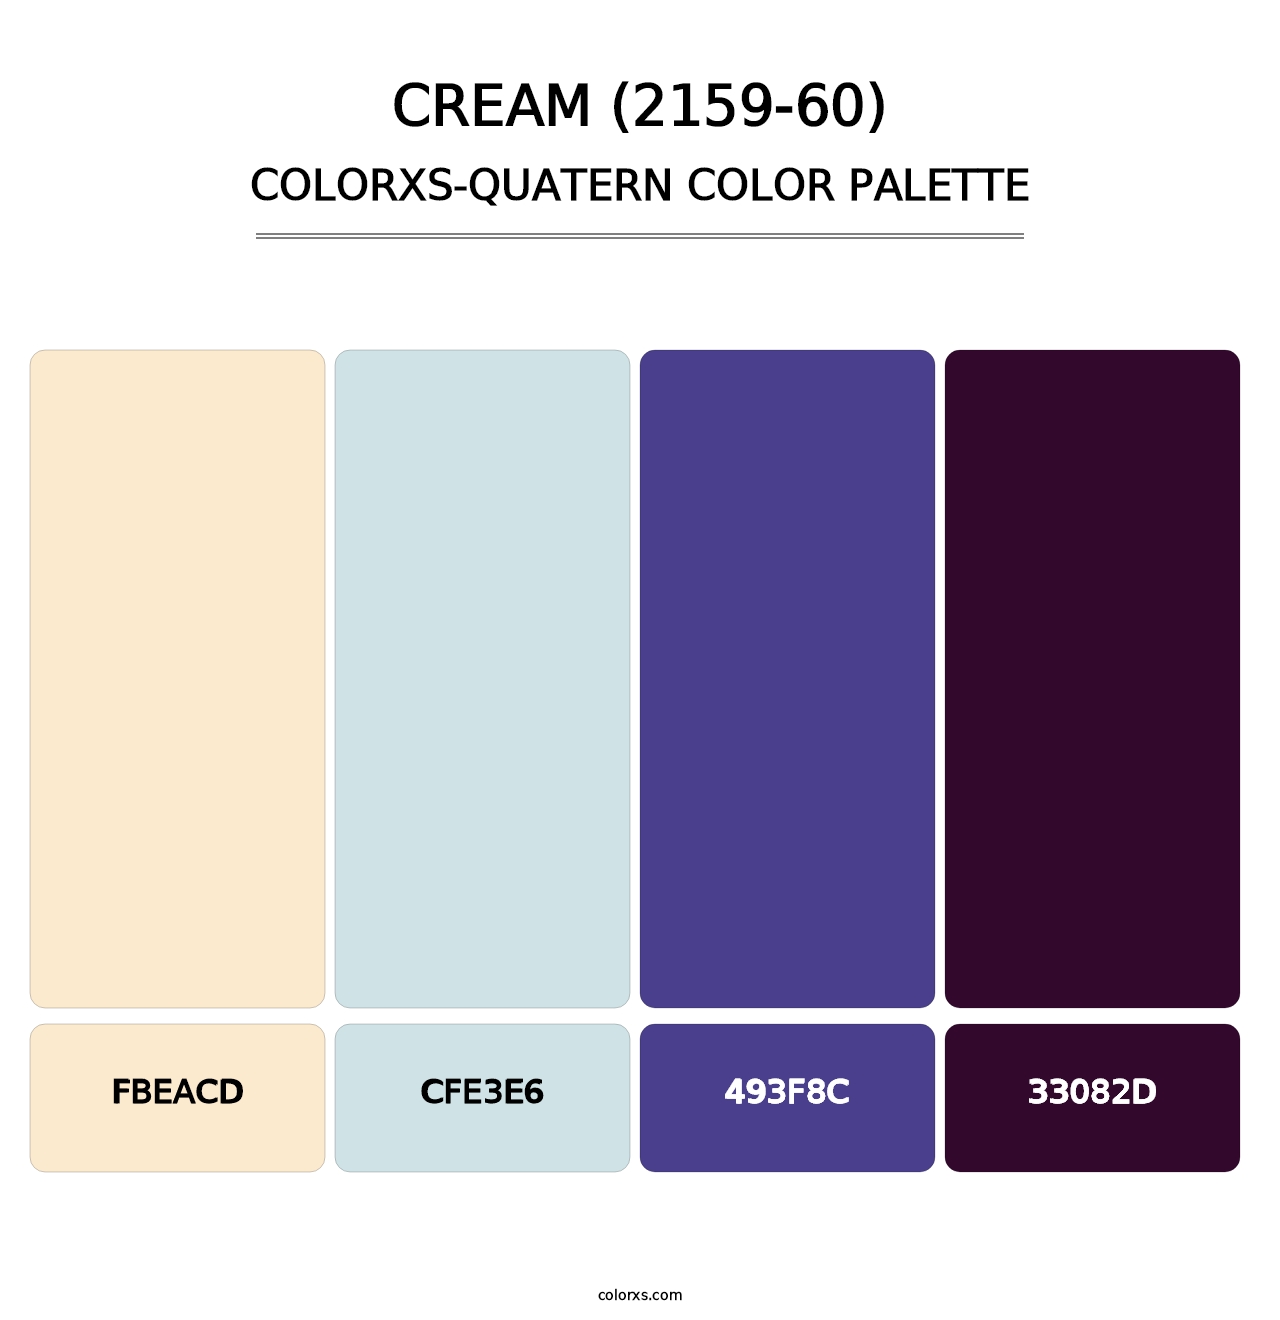 Cream (2159-60) - Colorxs Quatern Palette